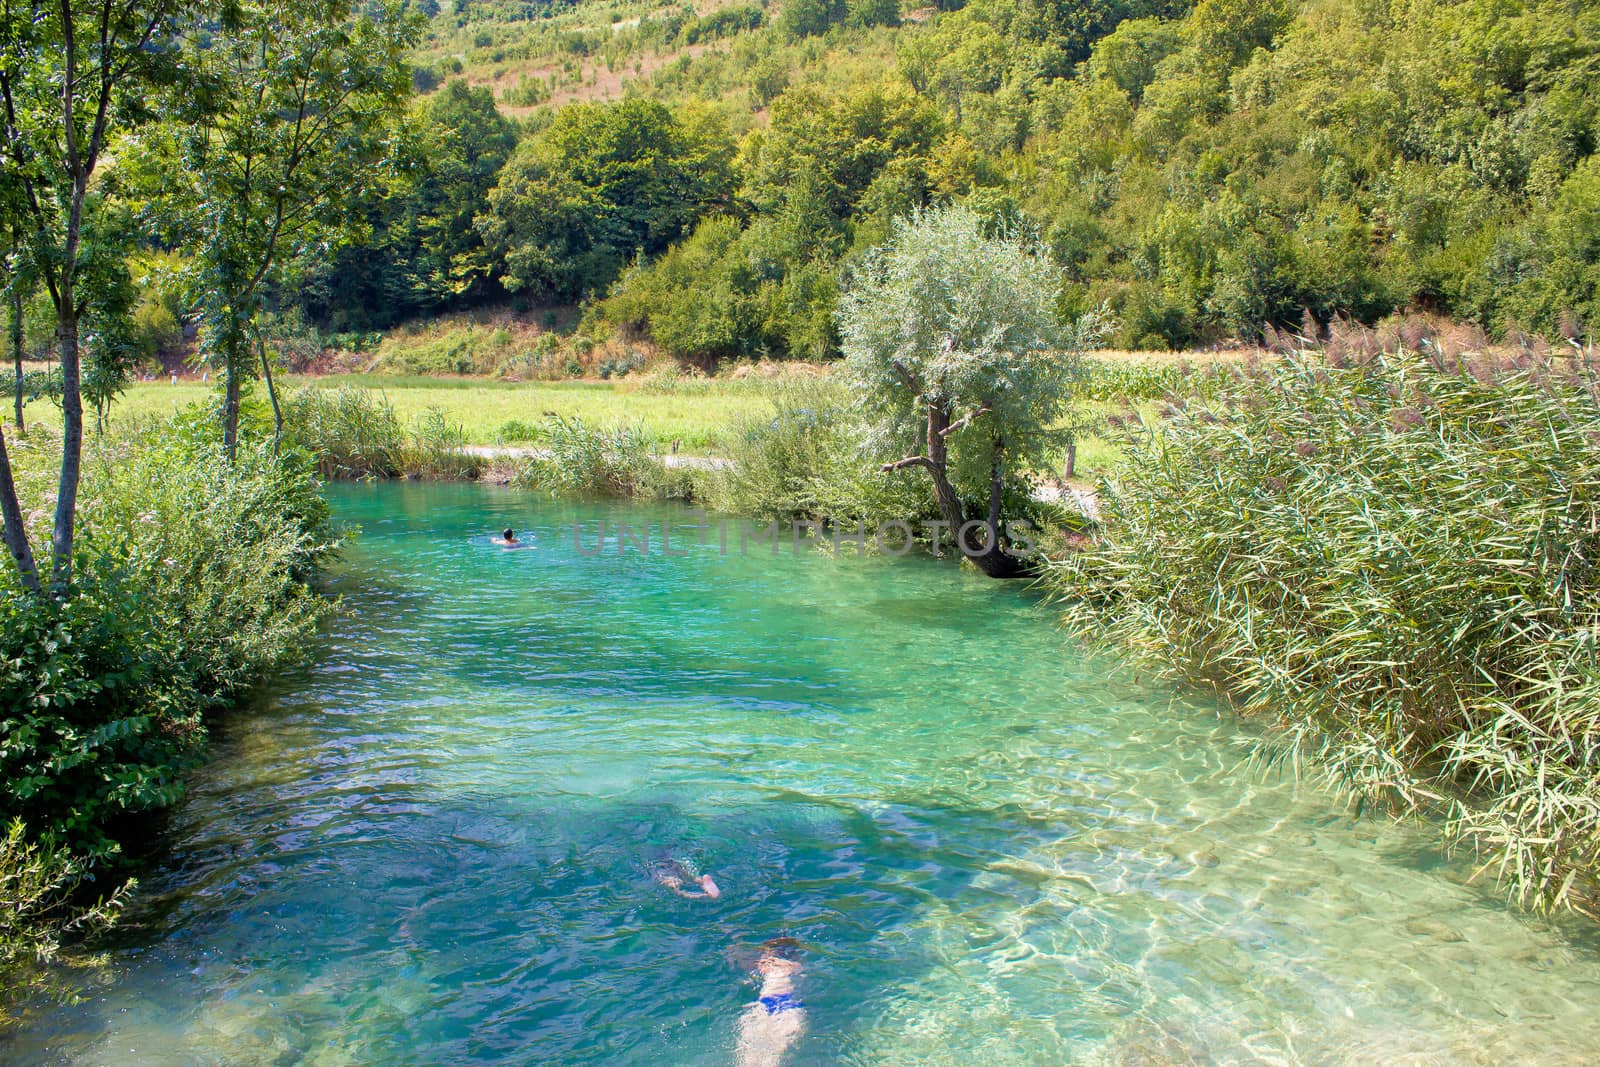 Korana river turquoise bathing area by xbrchx